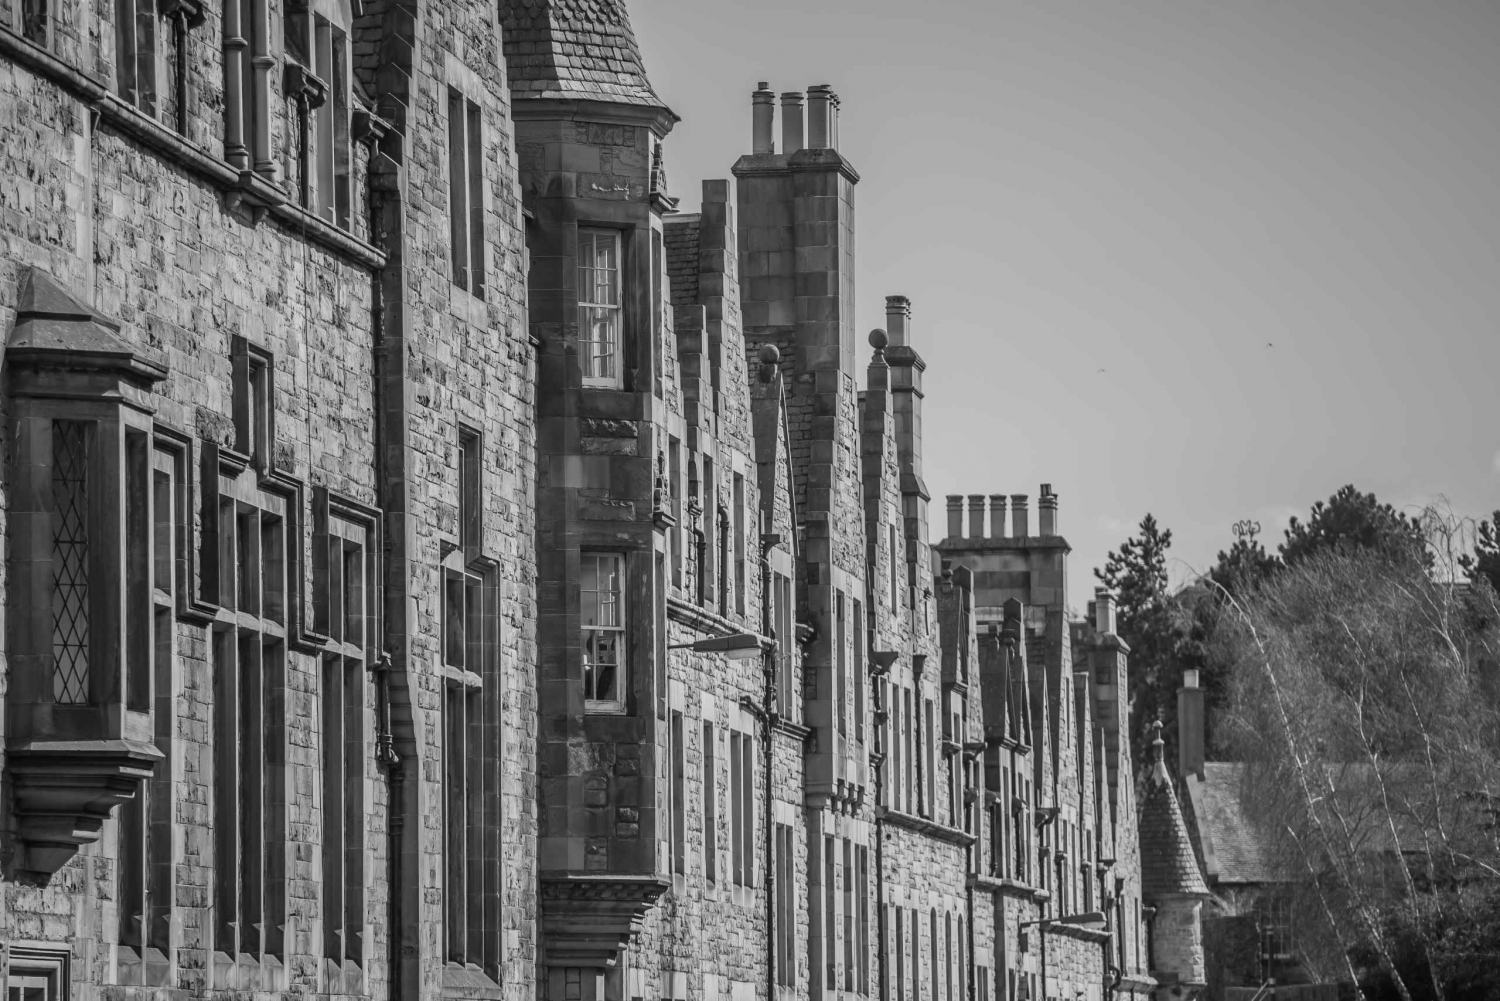 Edinburgh Old Town and Underground Historical Tour